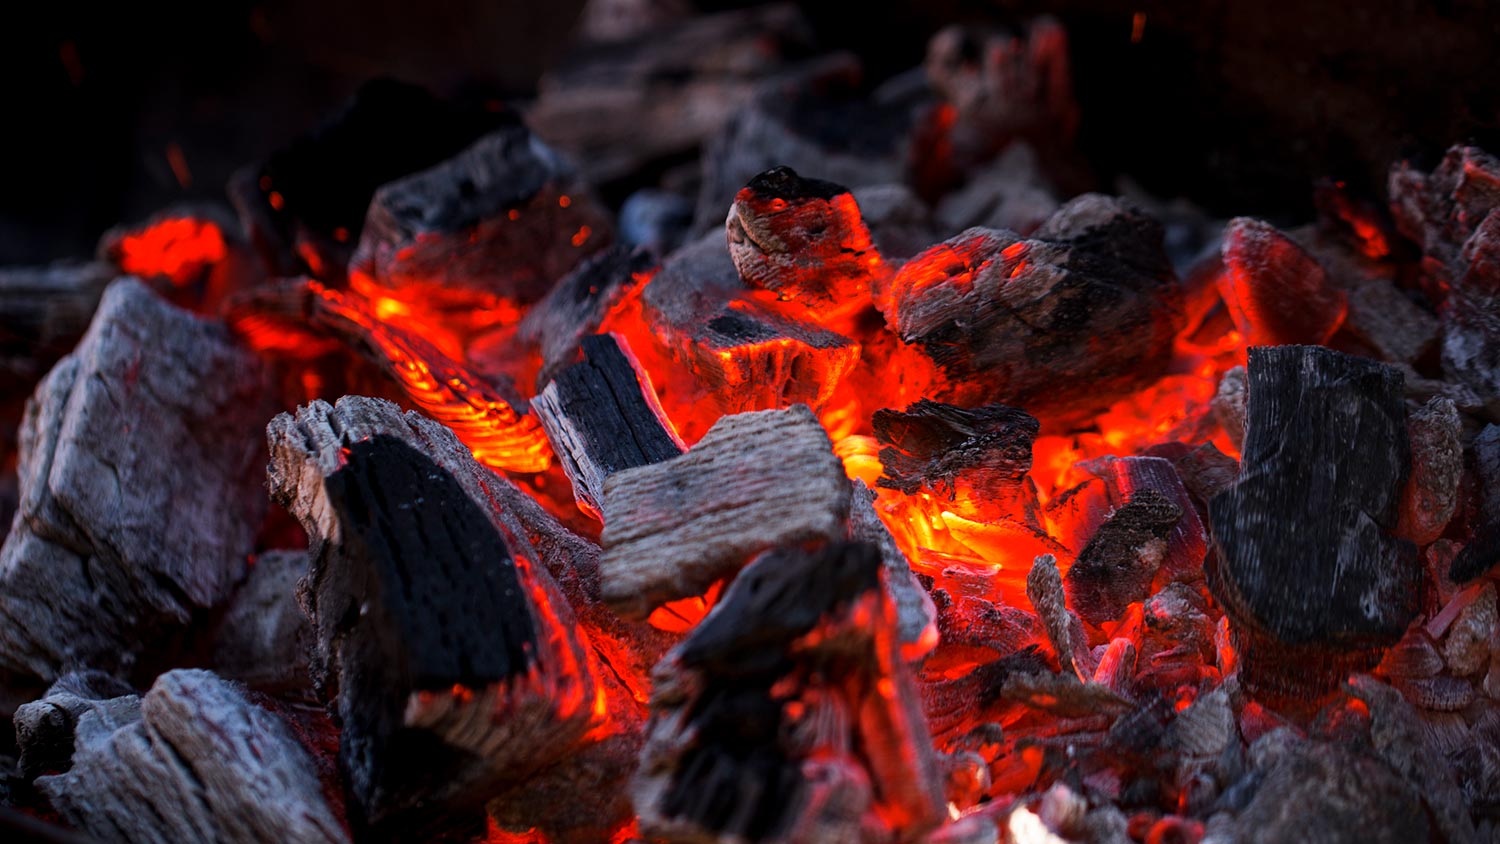 Glowing hot charcoal fire